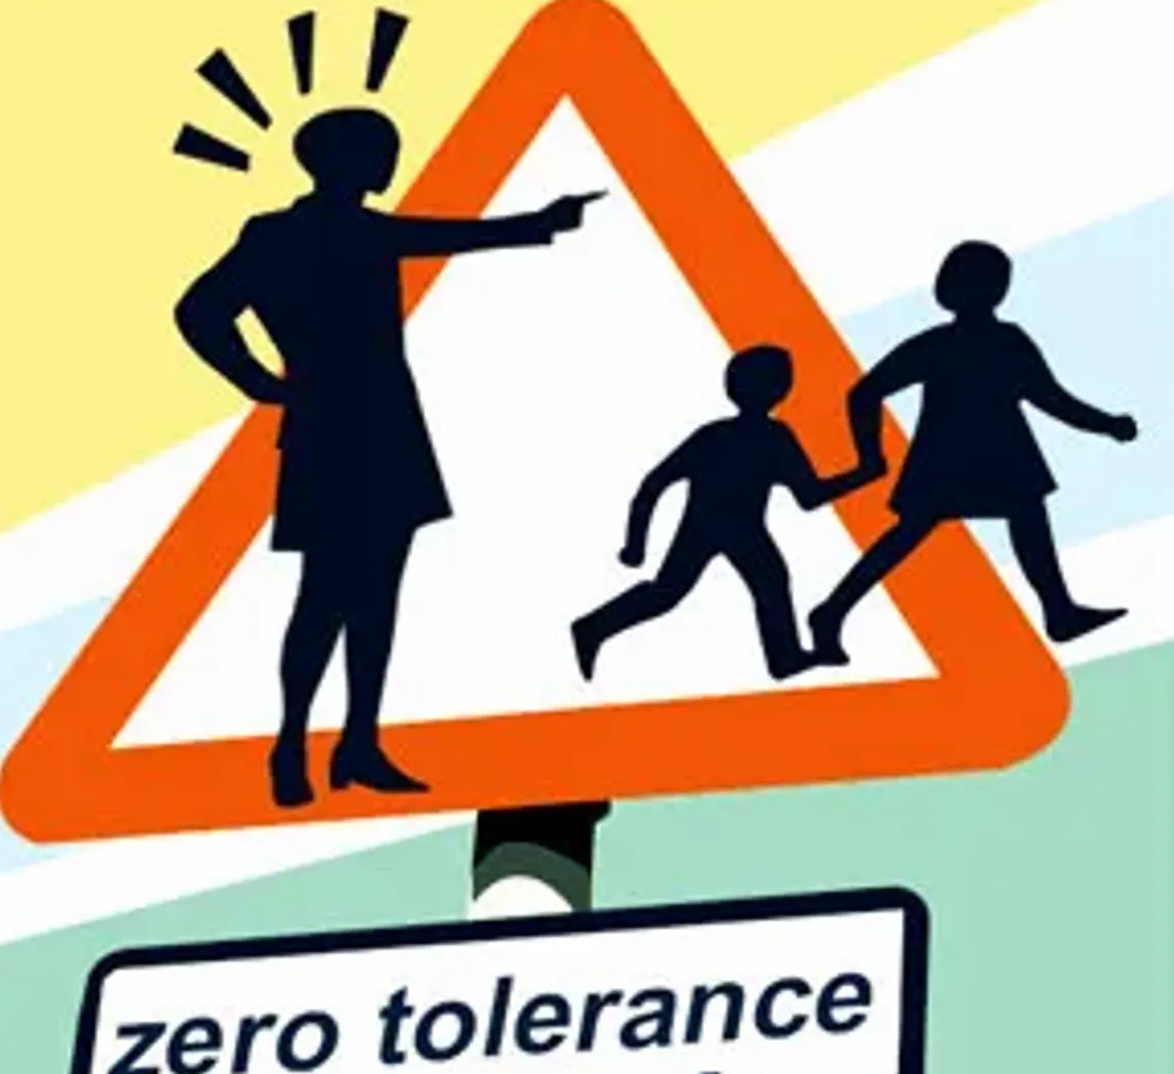 american culturalisms the world doesn't get - school suspensions - zero tolerance